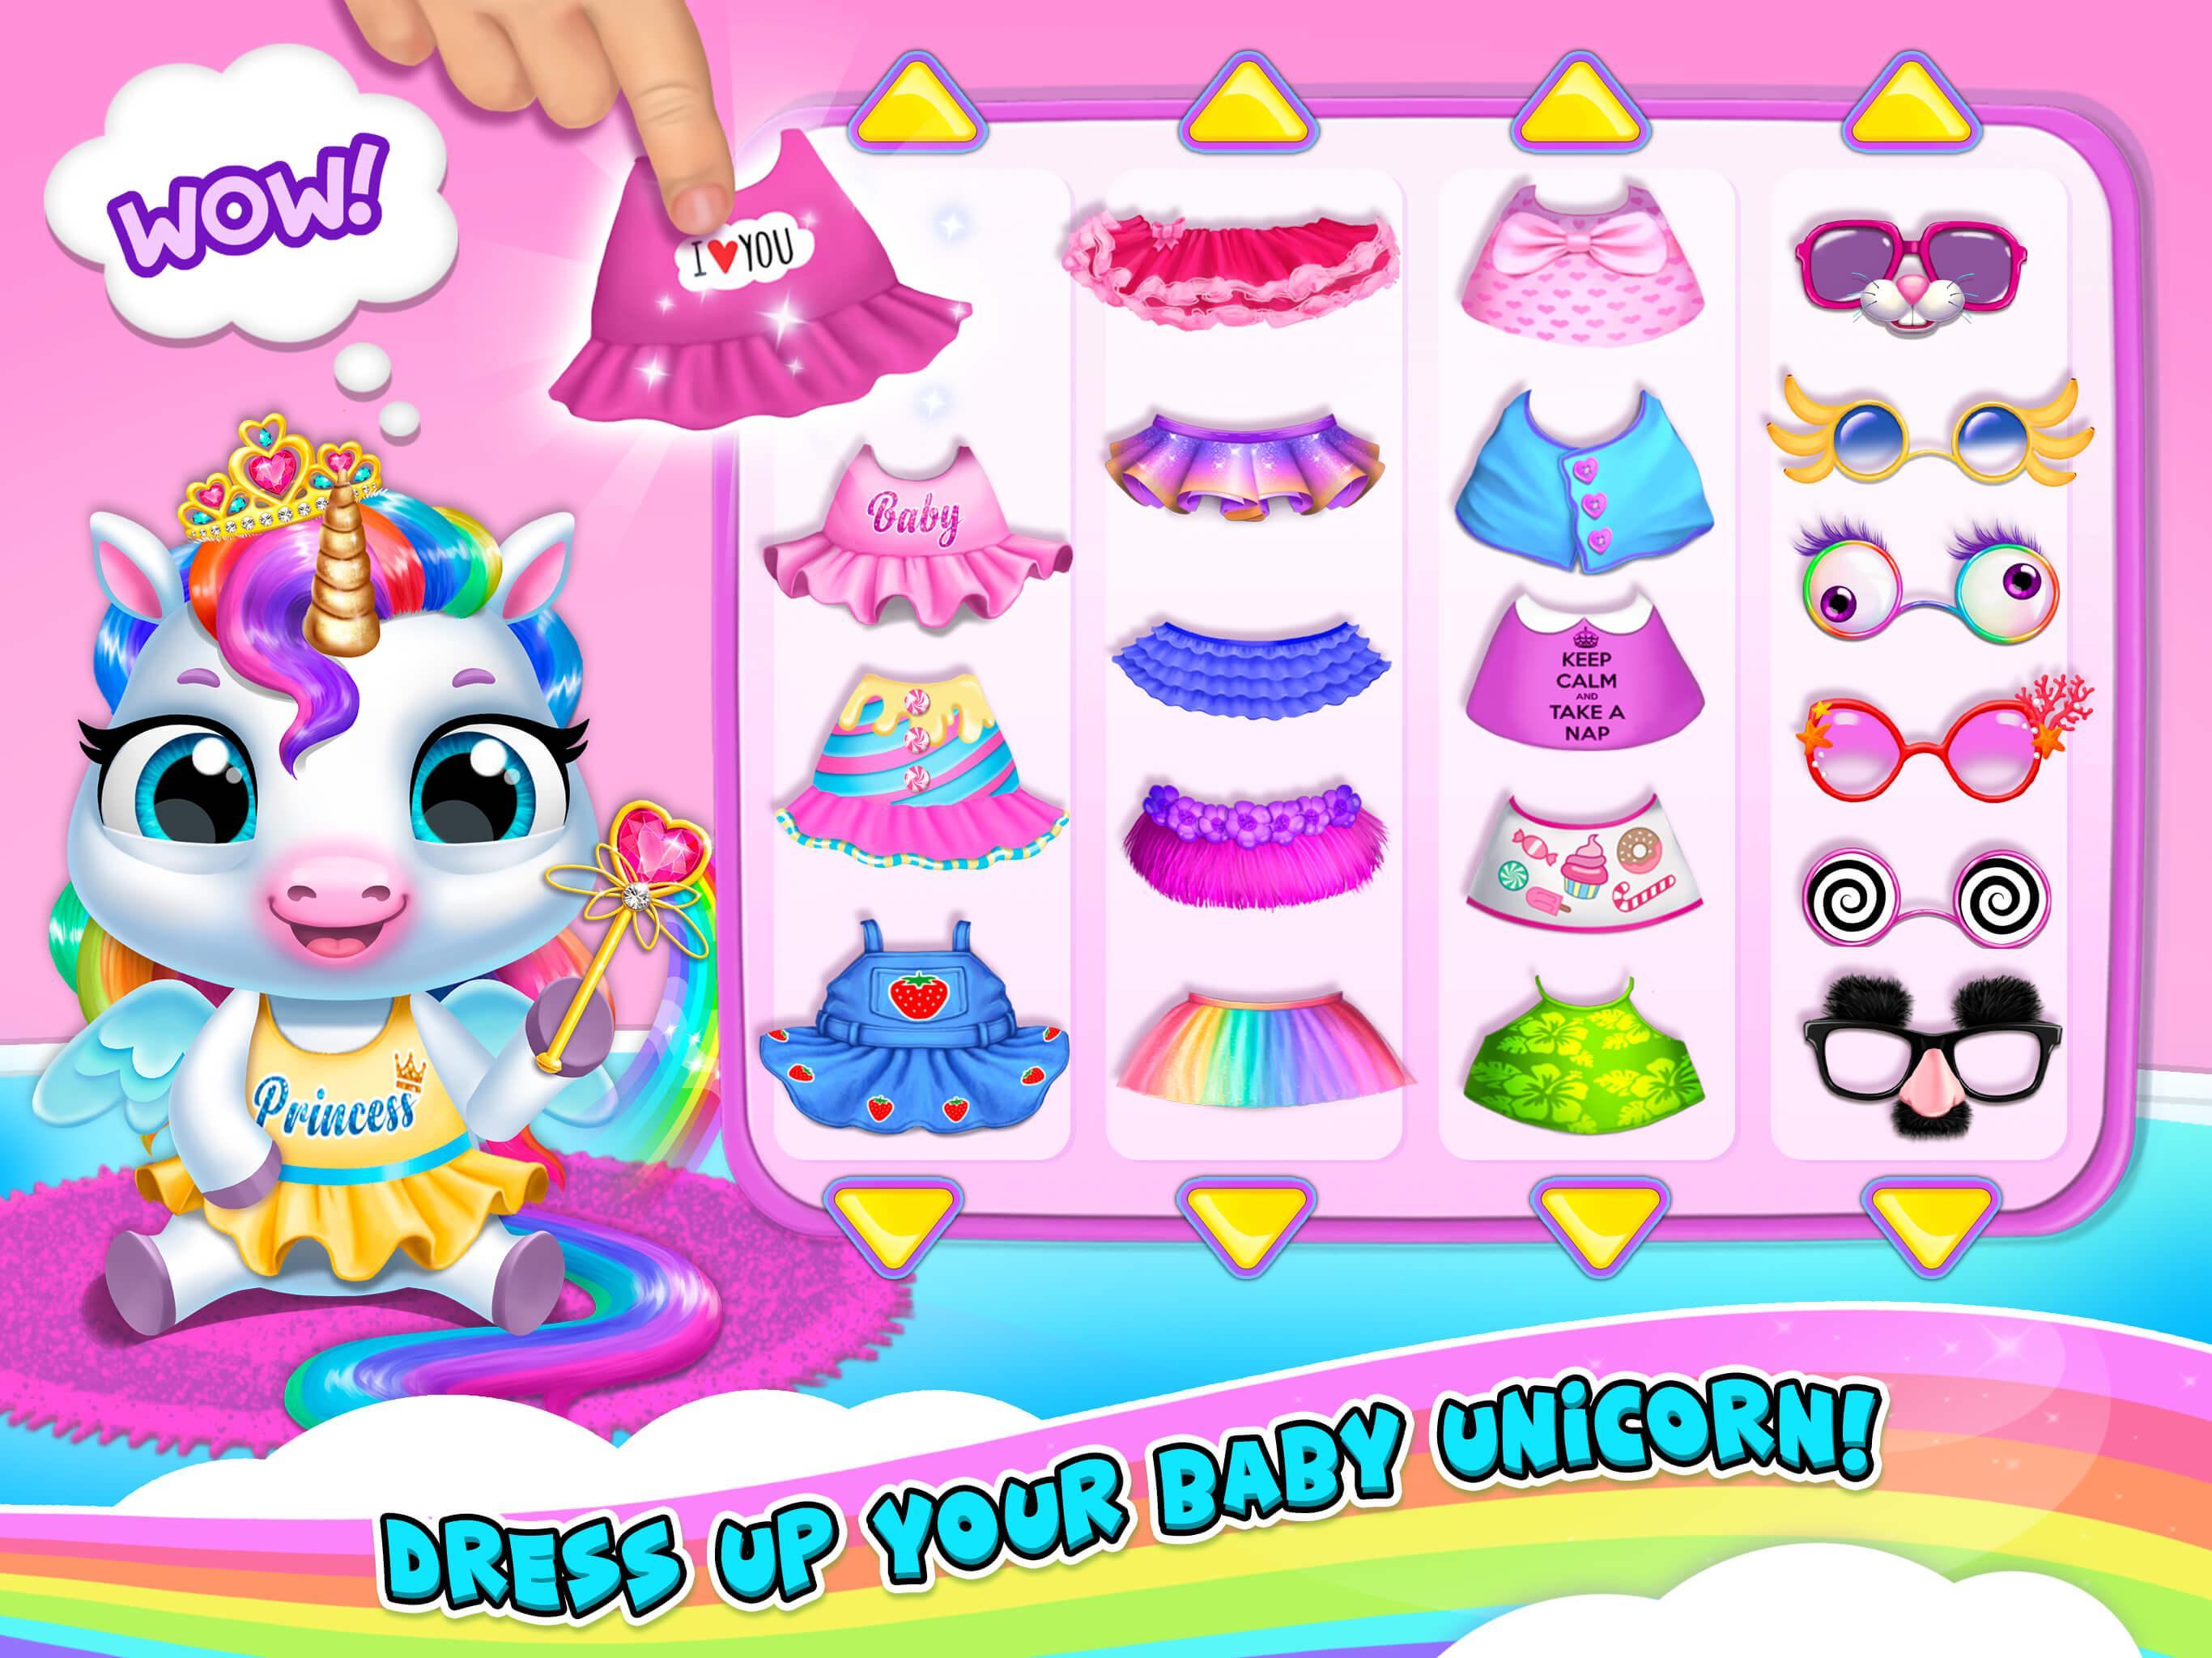 My Baby Unicorn 2 - New Virtual Pony Pet 1.0.49 Screenshot 19